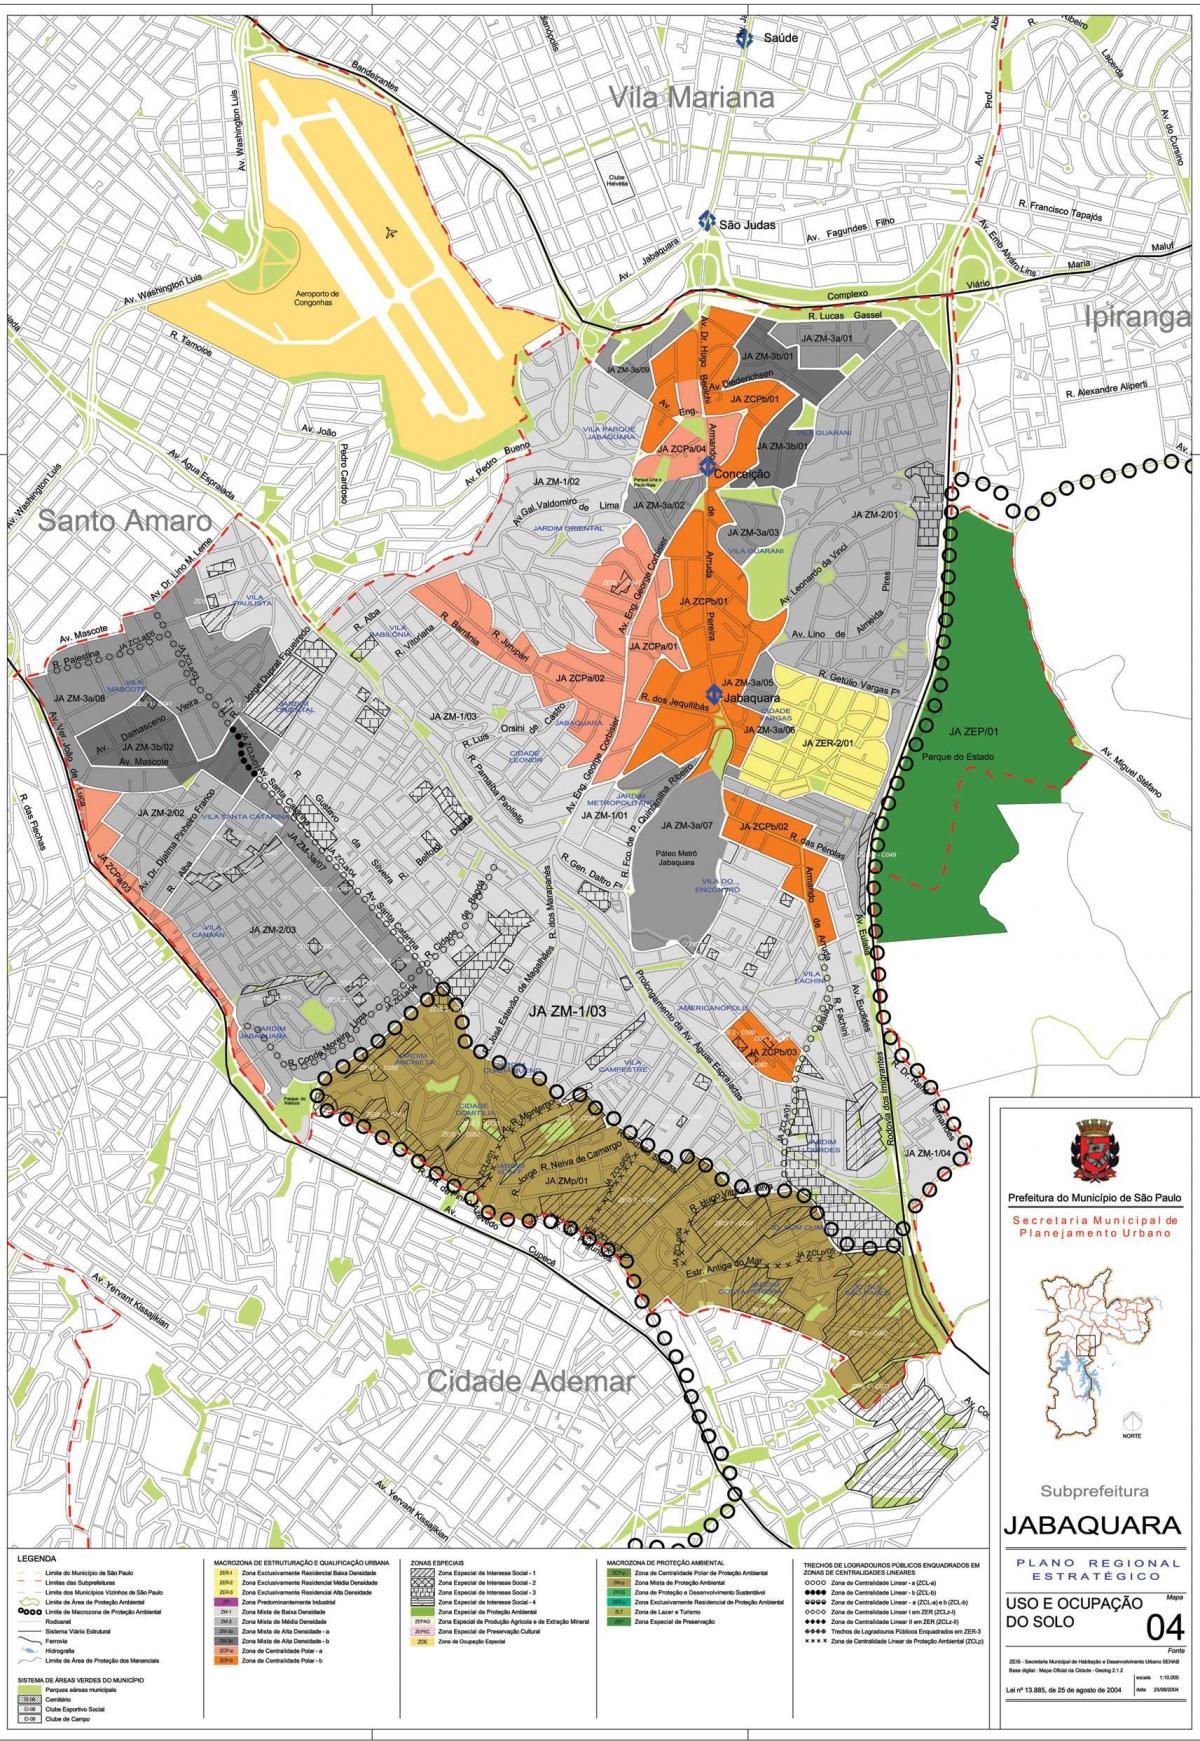 Mapa de Jabaquara São Paulo - Ocupación do solo